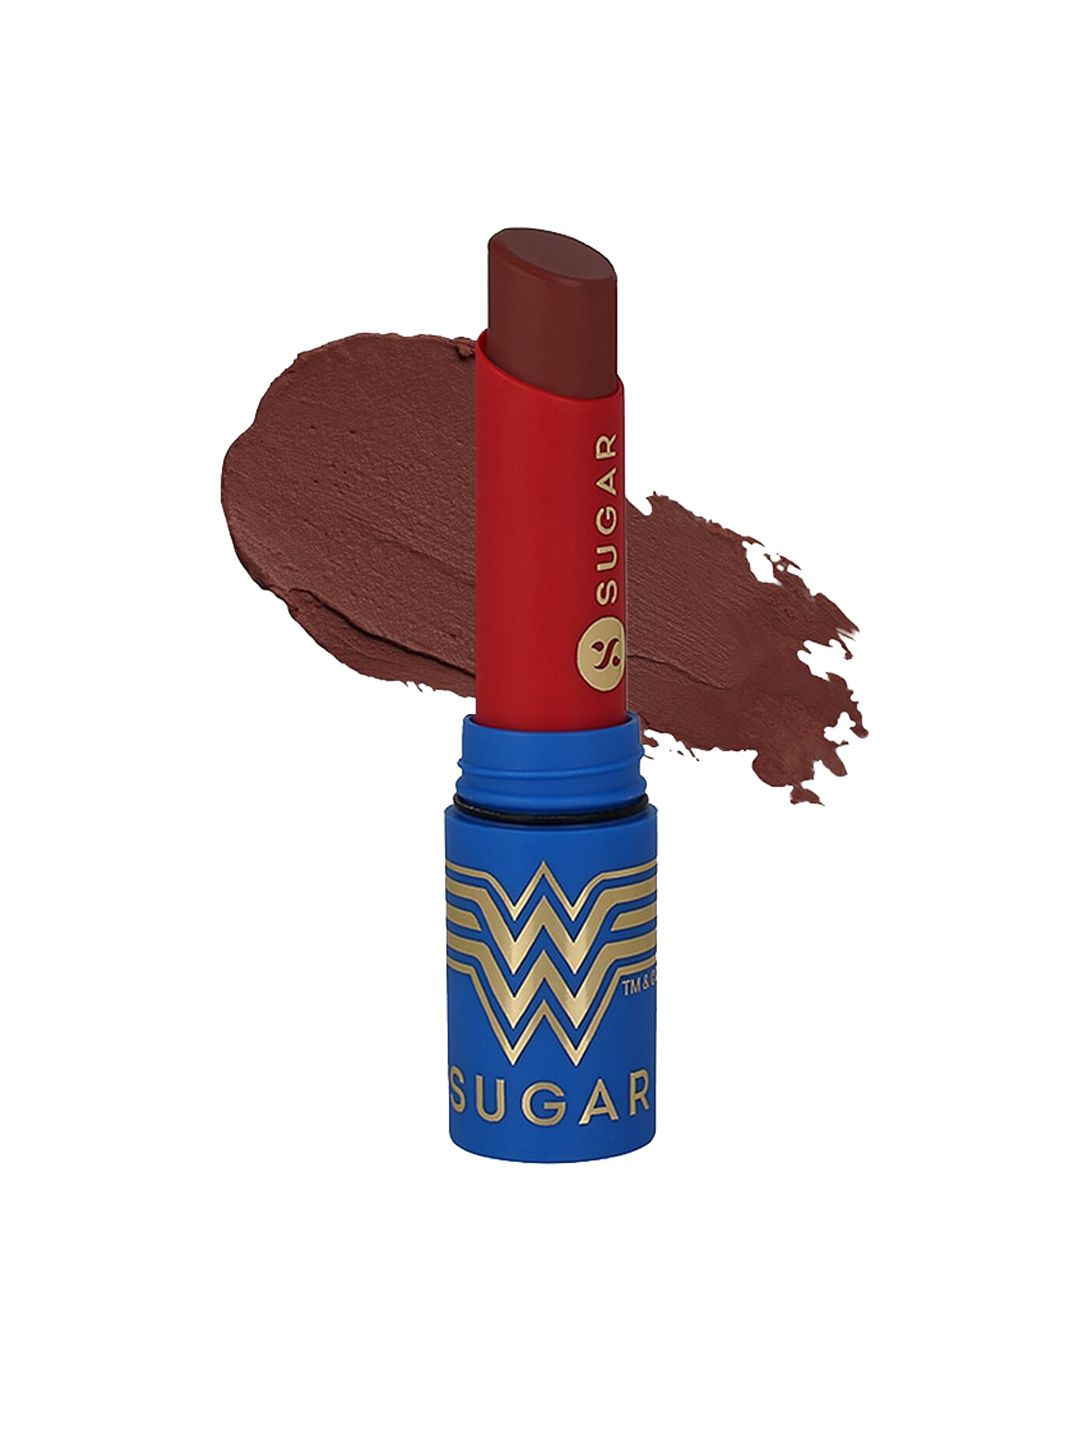 SUGAR X Wonder Woman Everlasting Matte Lipstick - 09 Justice Price in India